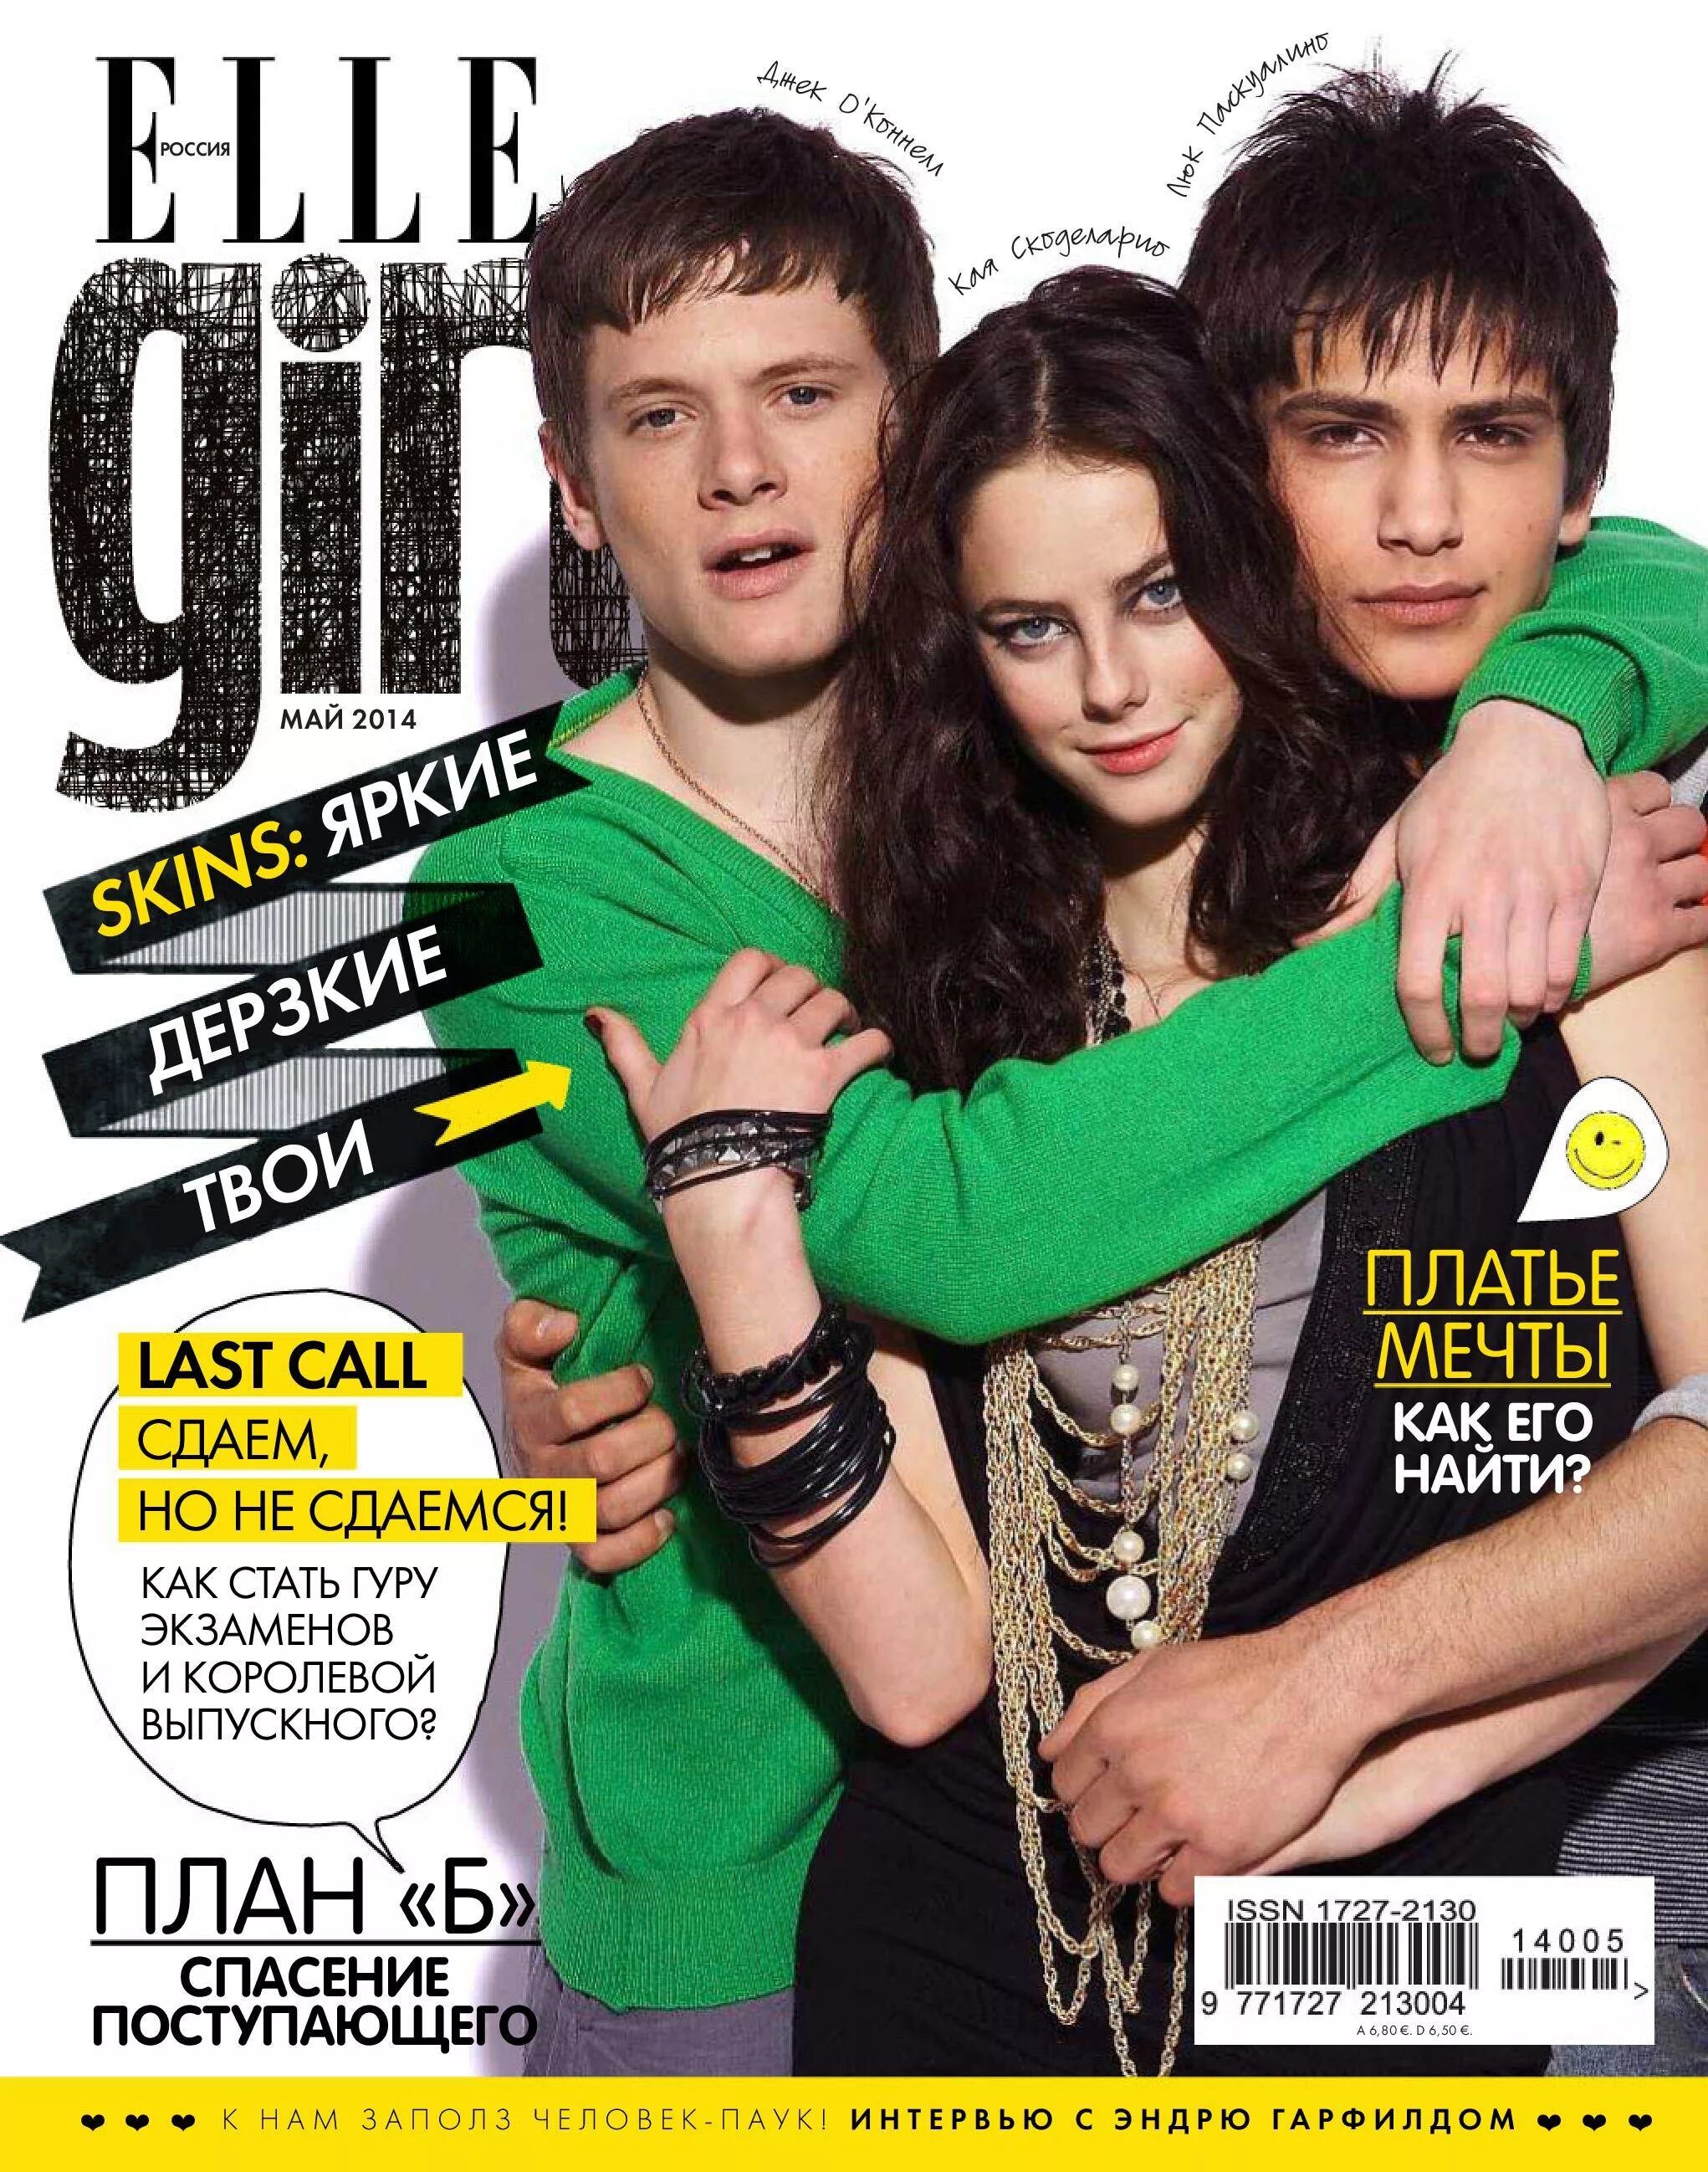 Журнал е 3 с. Журнал elle girl. The girl журнал. Девушка с журналом. Обложки журналов для подростков.